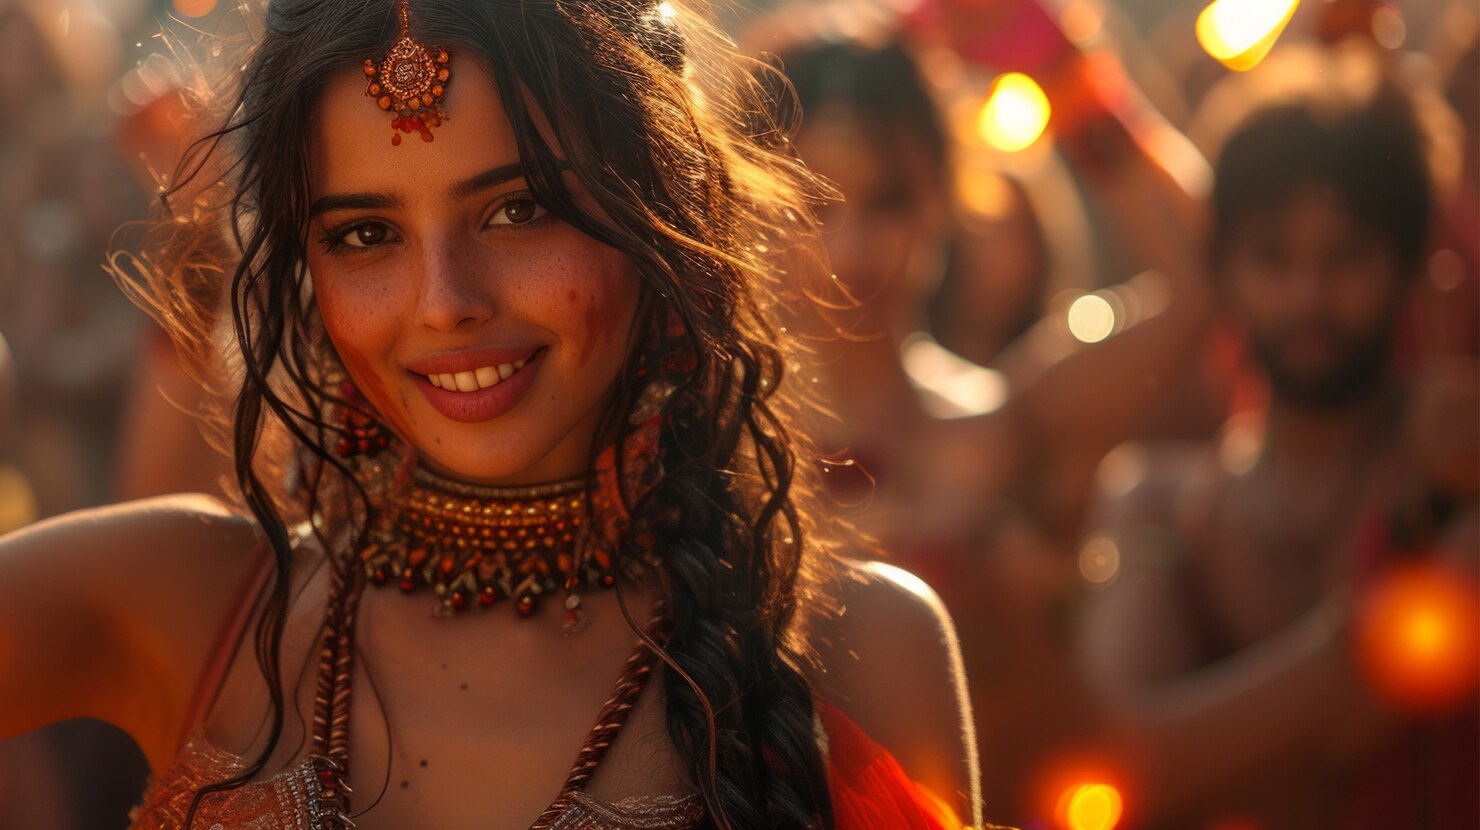  beautiful Indian woman